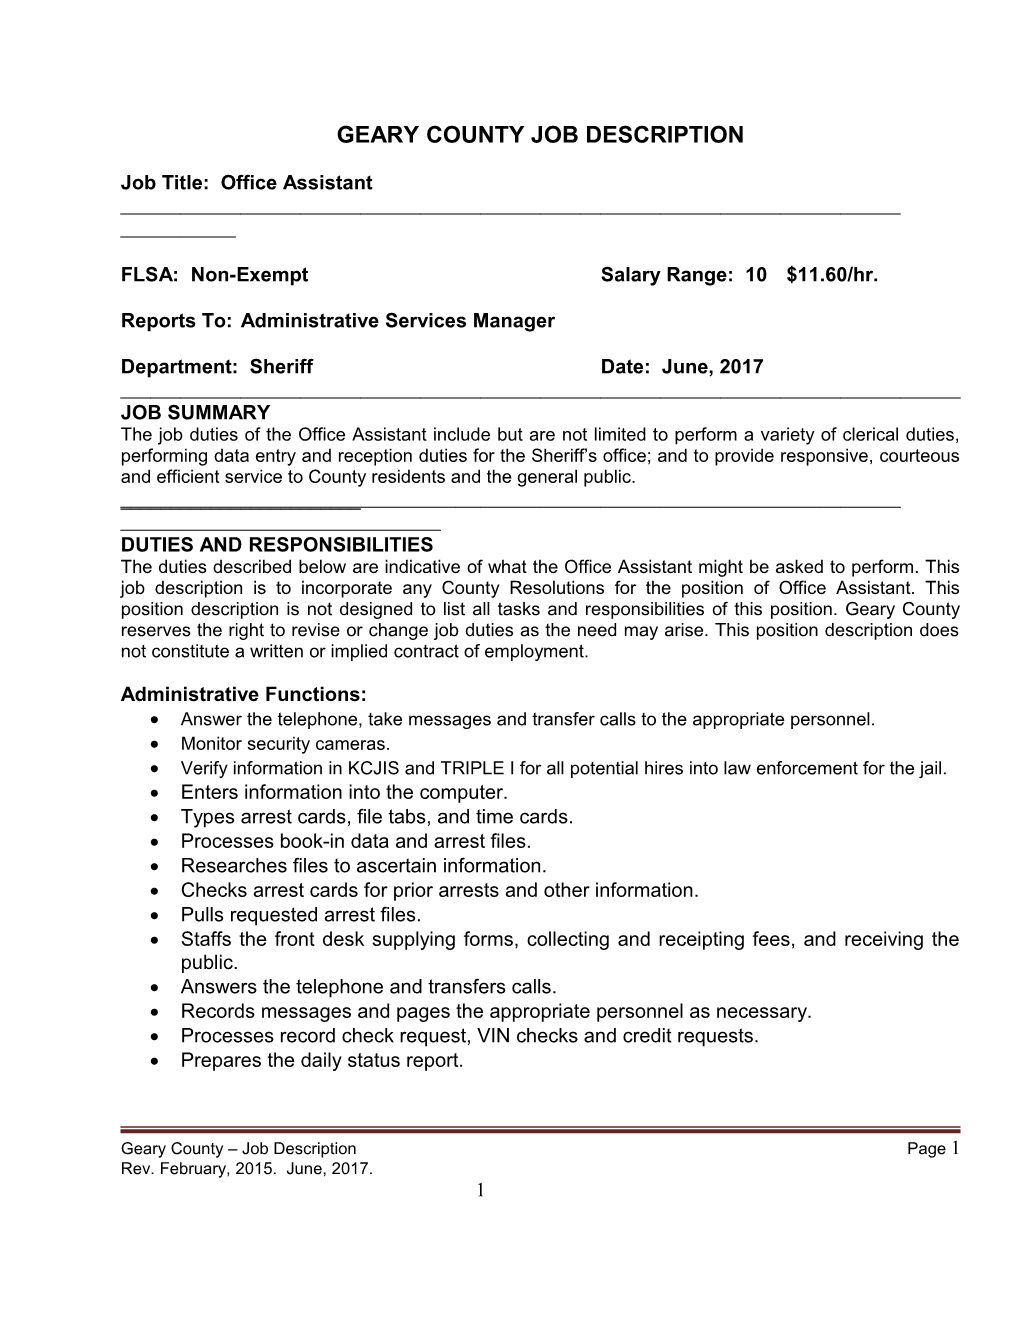 Geary County Job Description s1